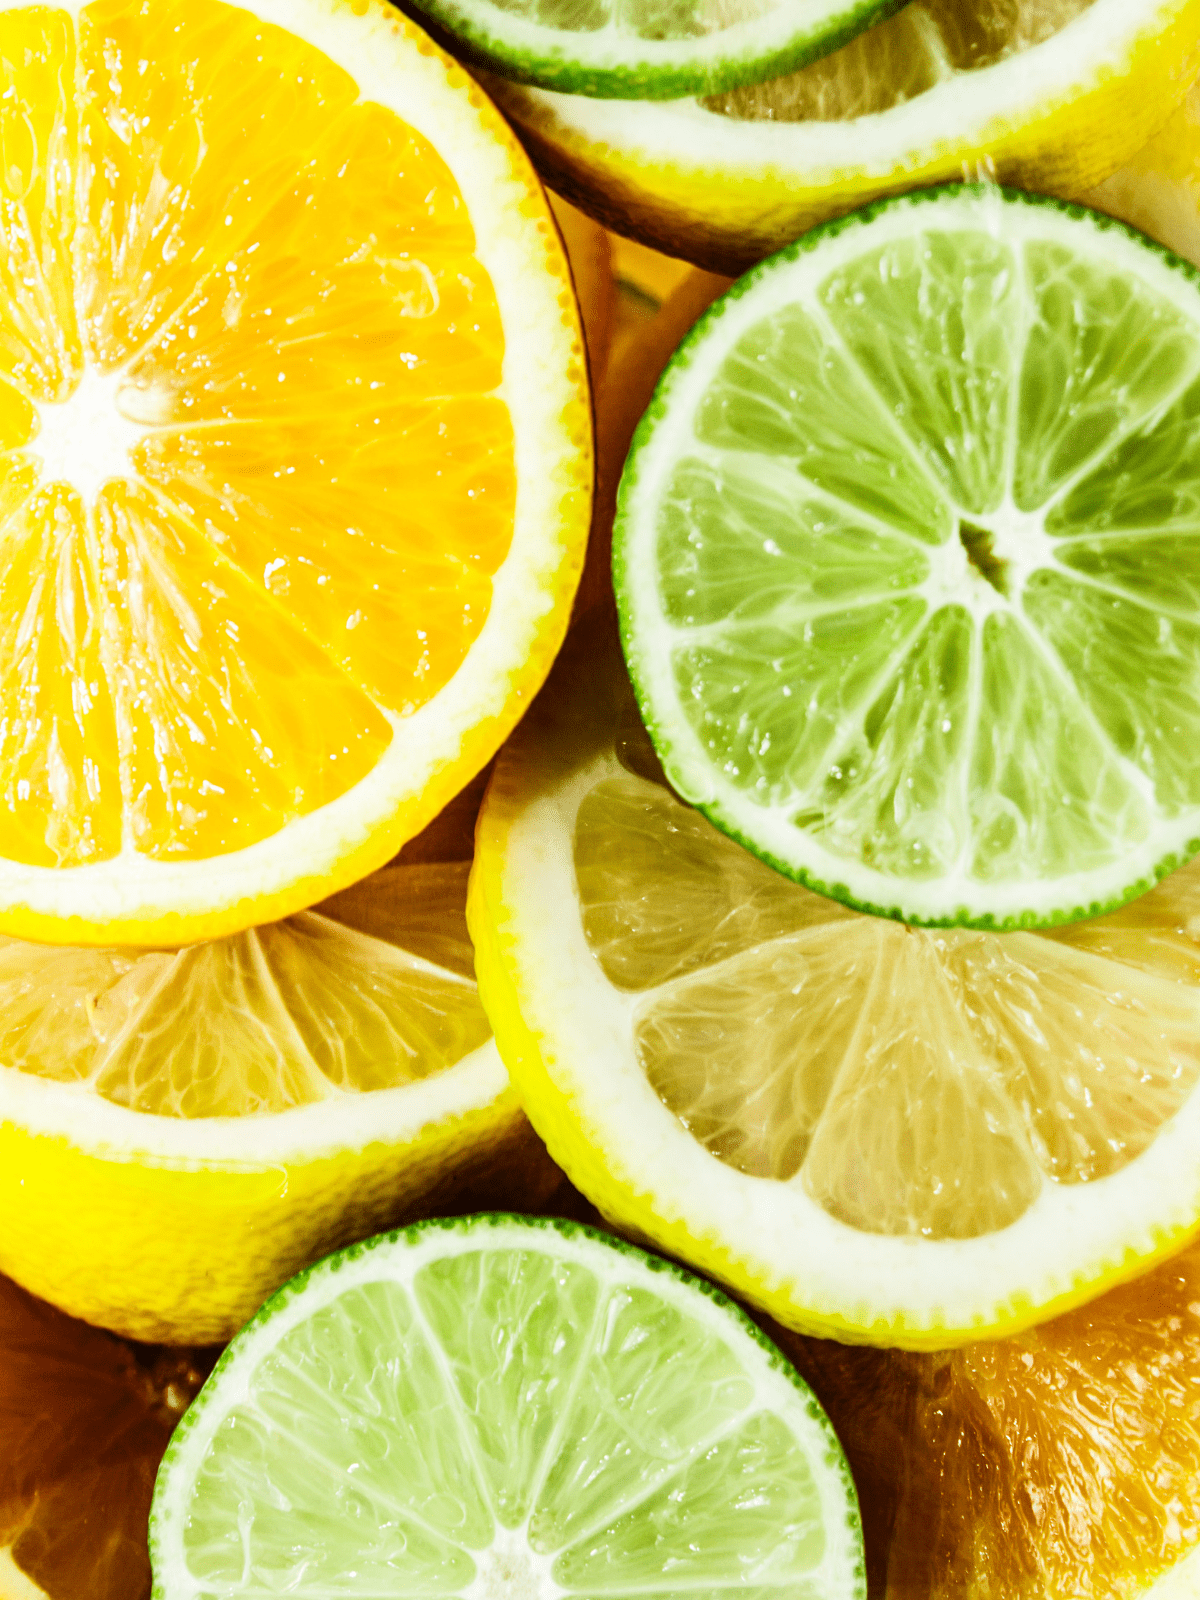 Oranges lime and lemon slices.